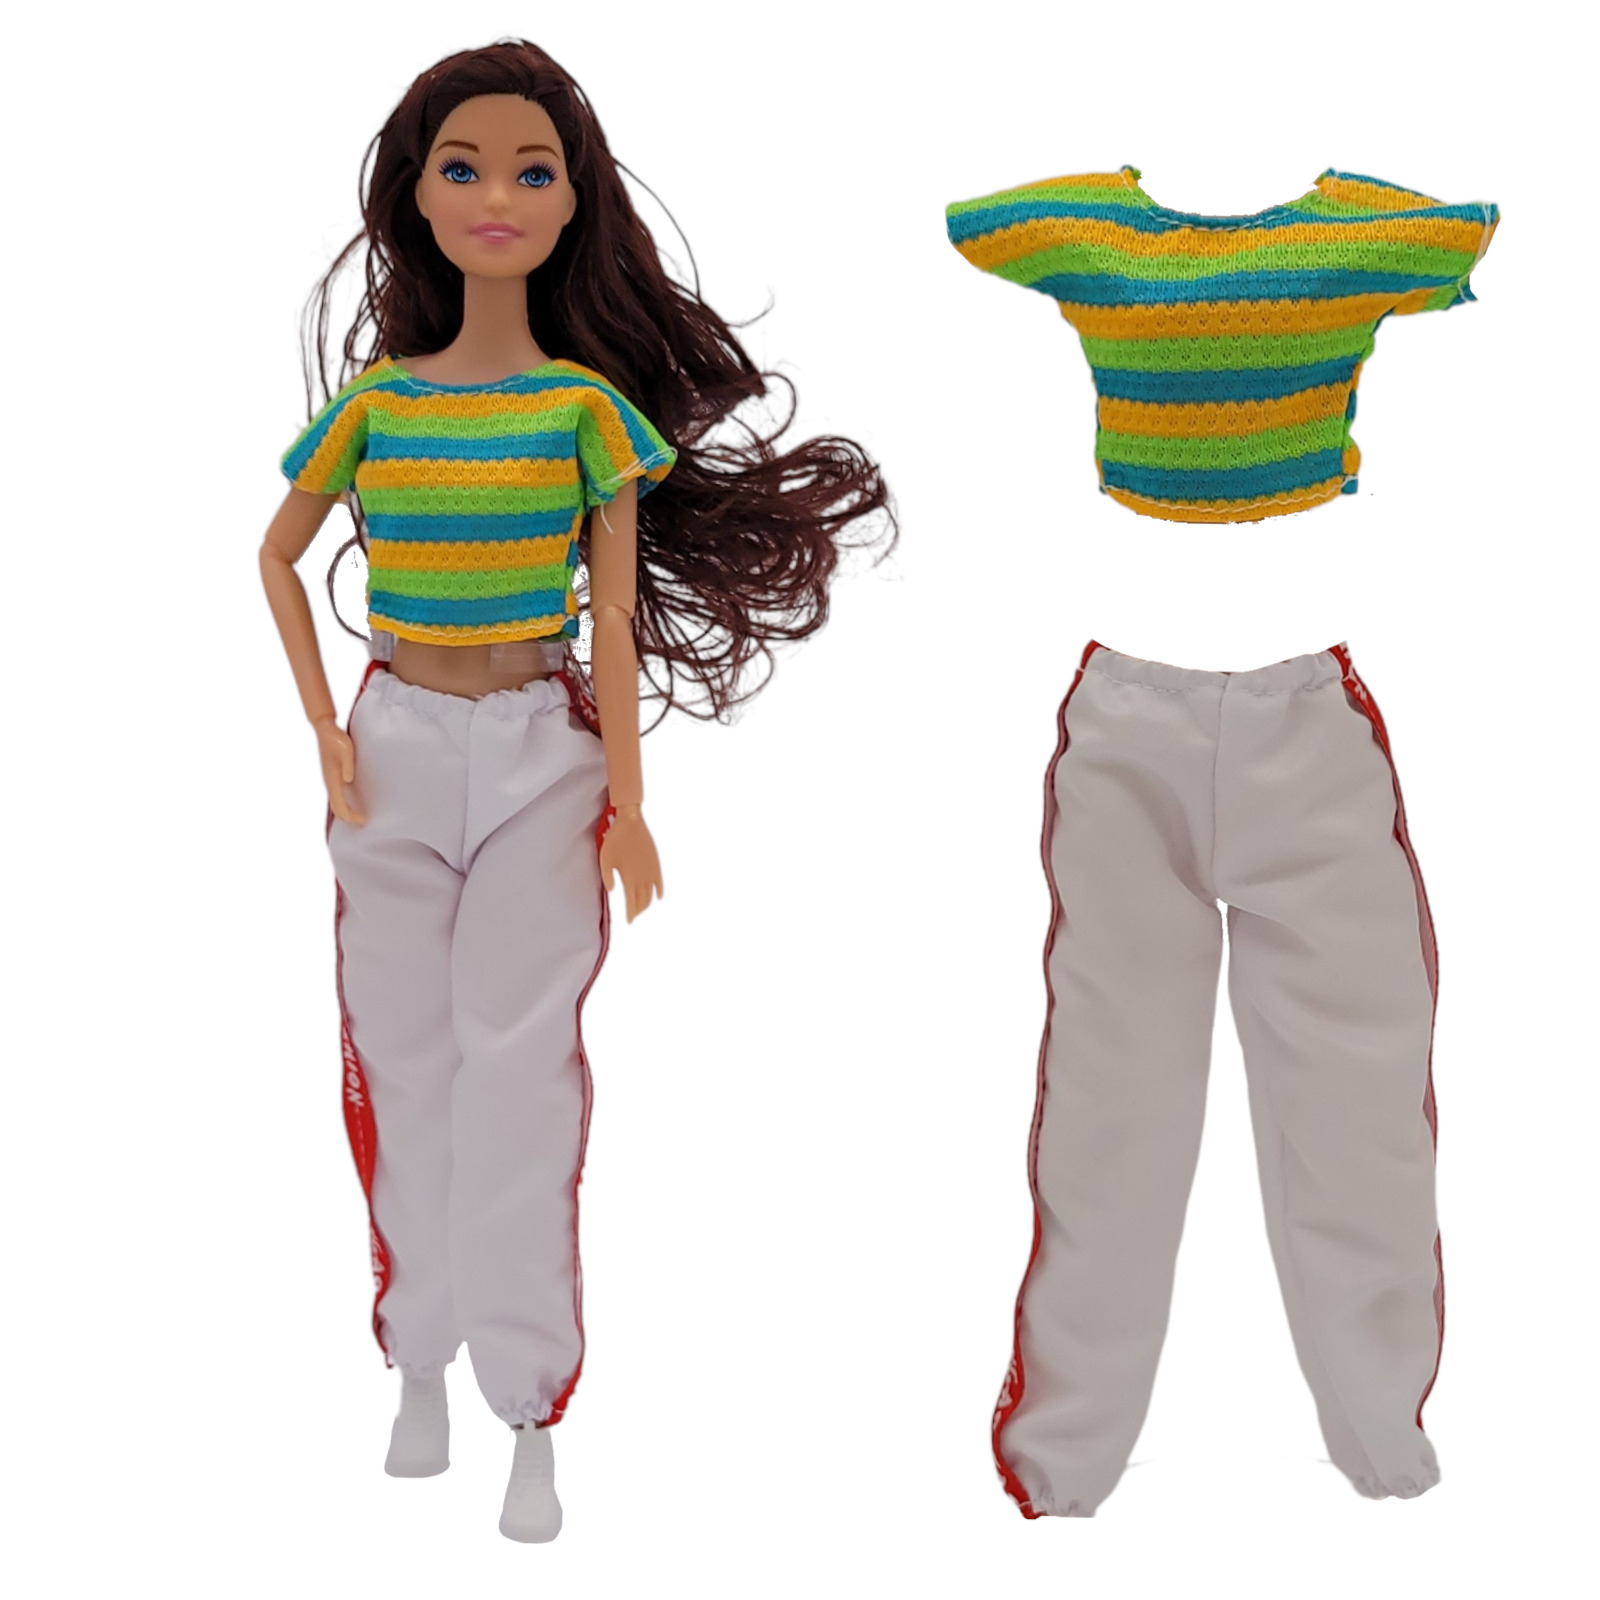 Kleidung Sportmode Hose Leggins Tops Kleider Outfit für Barbie Puppe 4 Sets